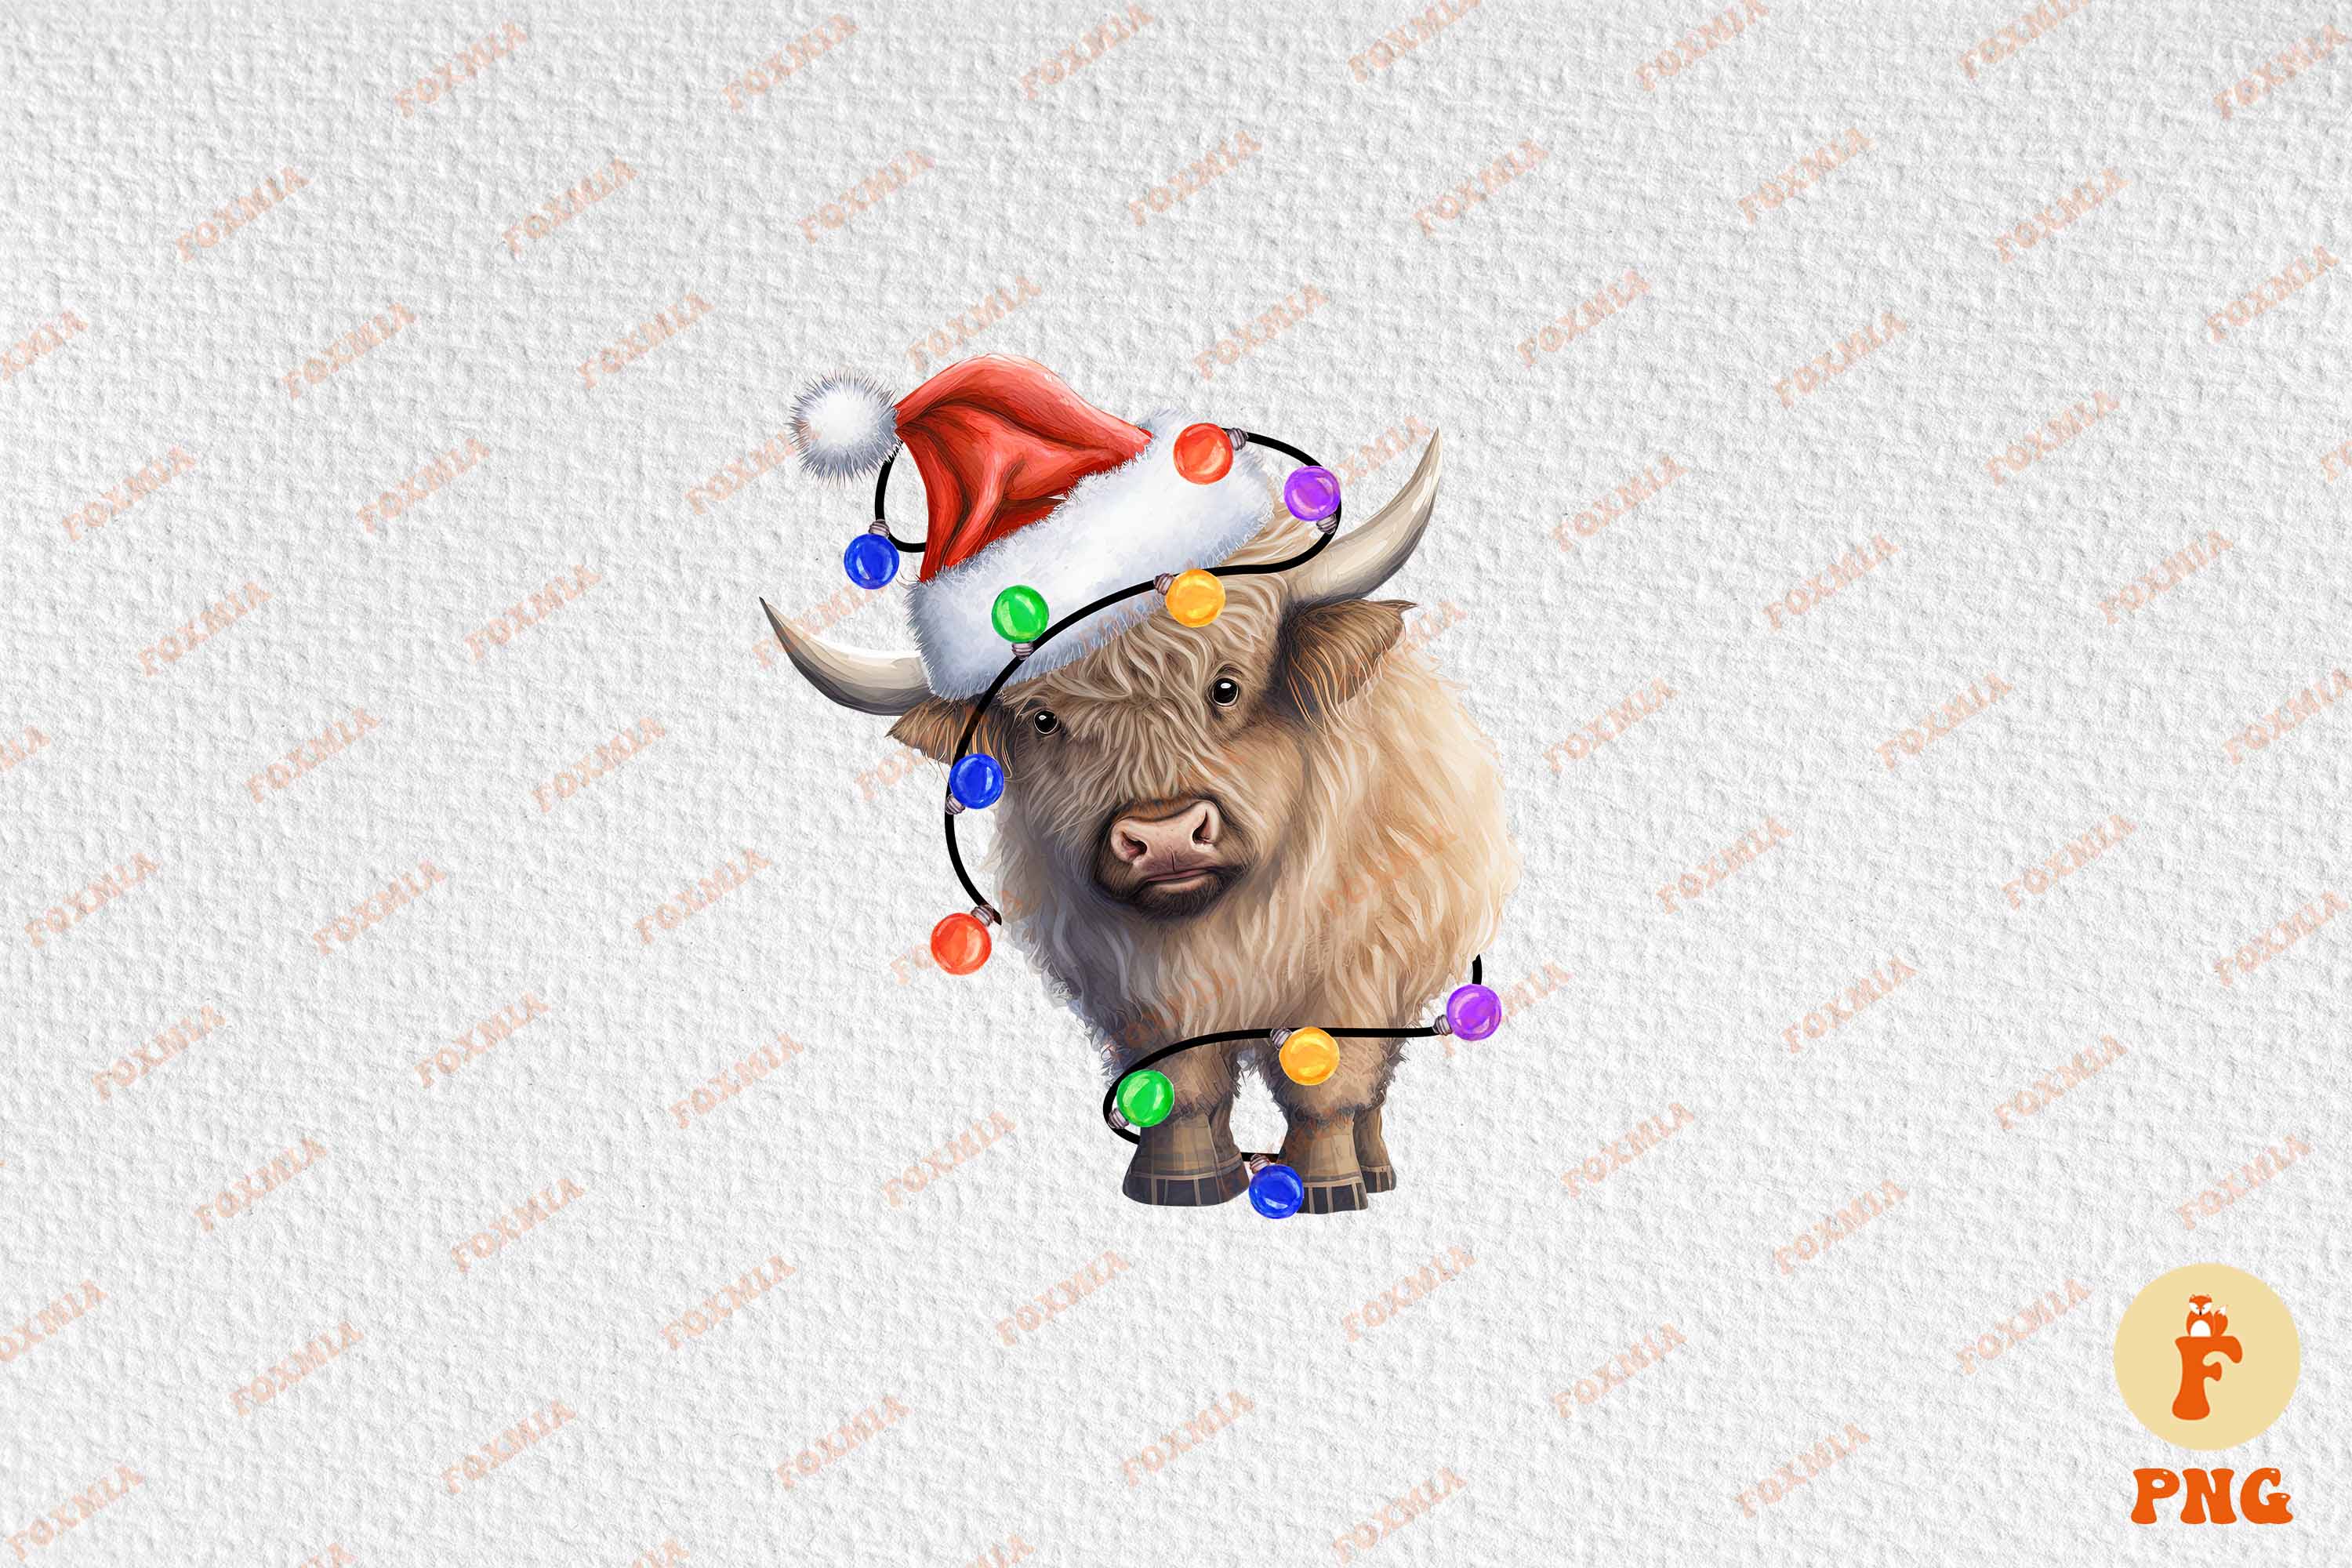 Gorgeous image of a buffalo wearing a santa hat.